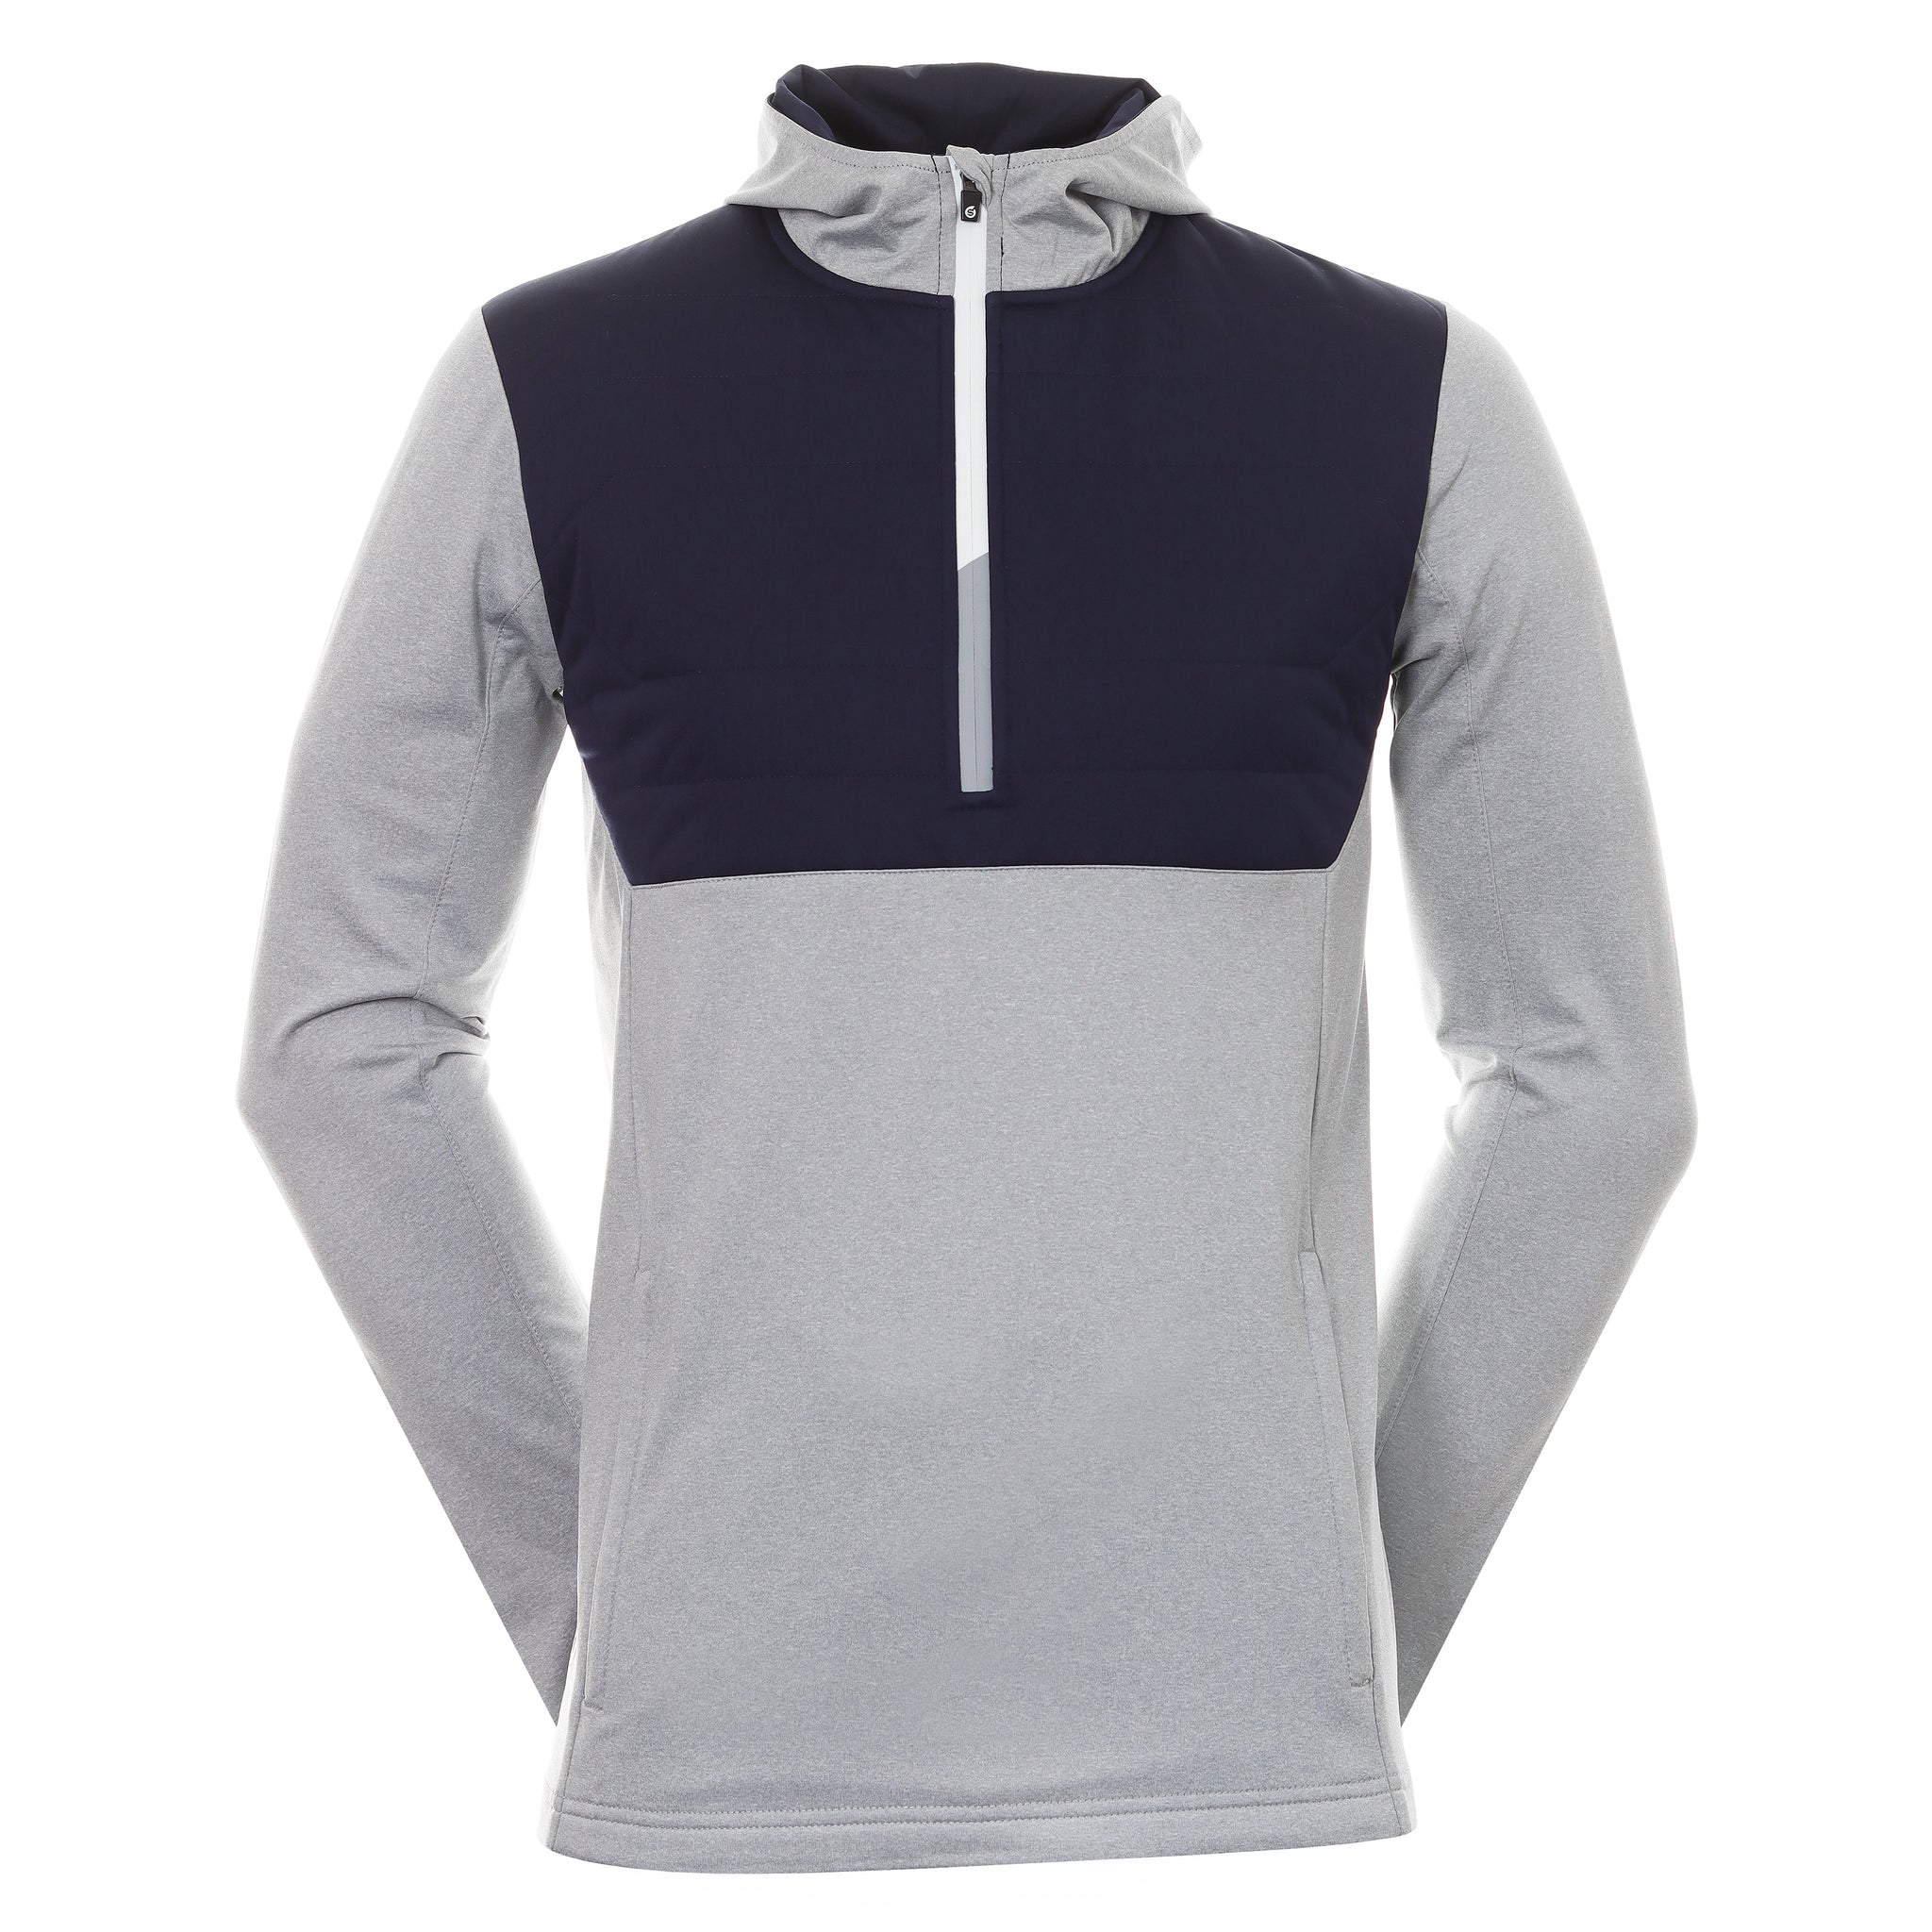 sunderland-golf-everest-hybrid-hoodie-sunmm90-eve-silver-marl-navy-white